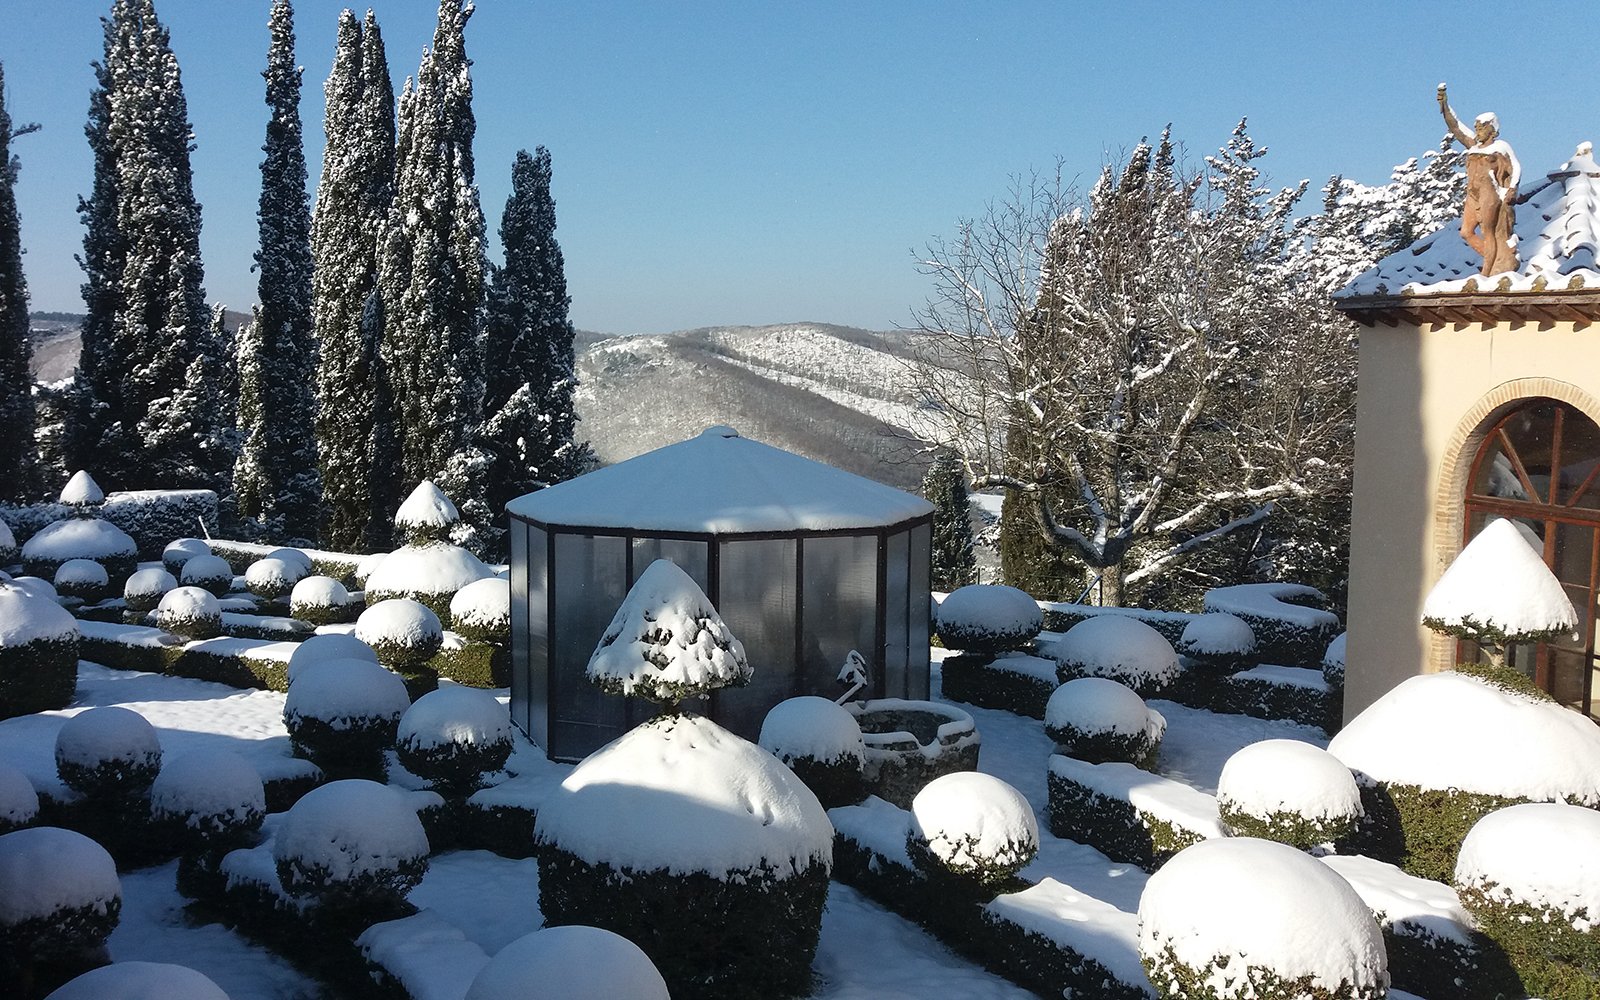 The Borgo under the snow!